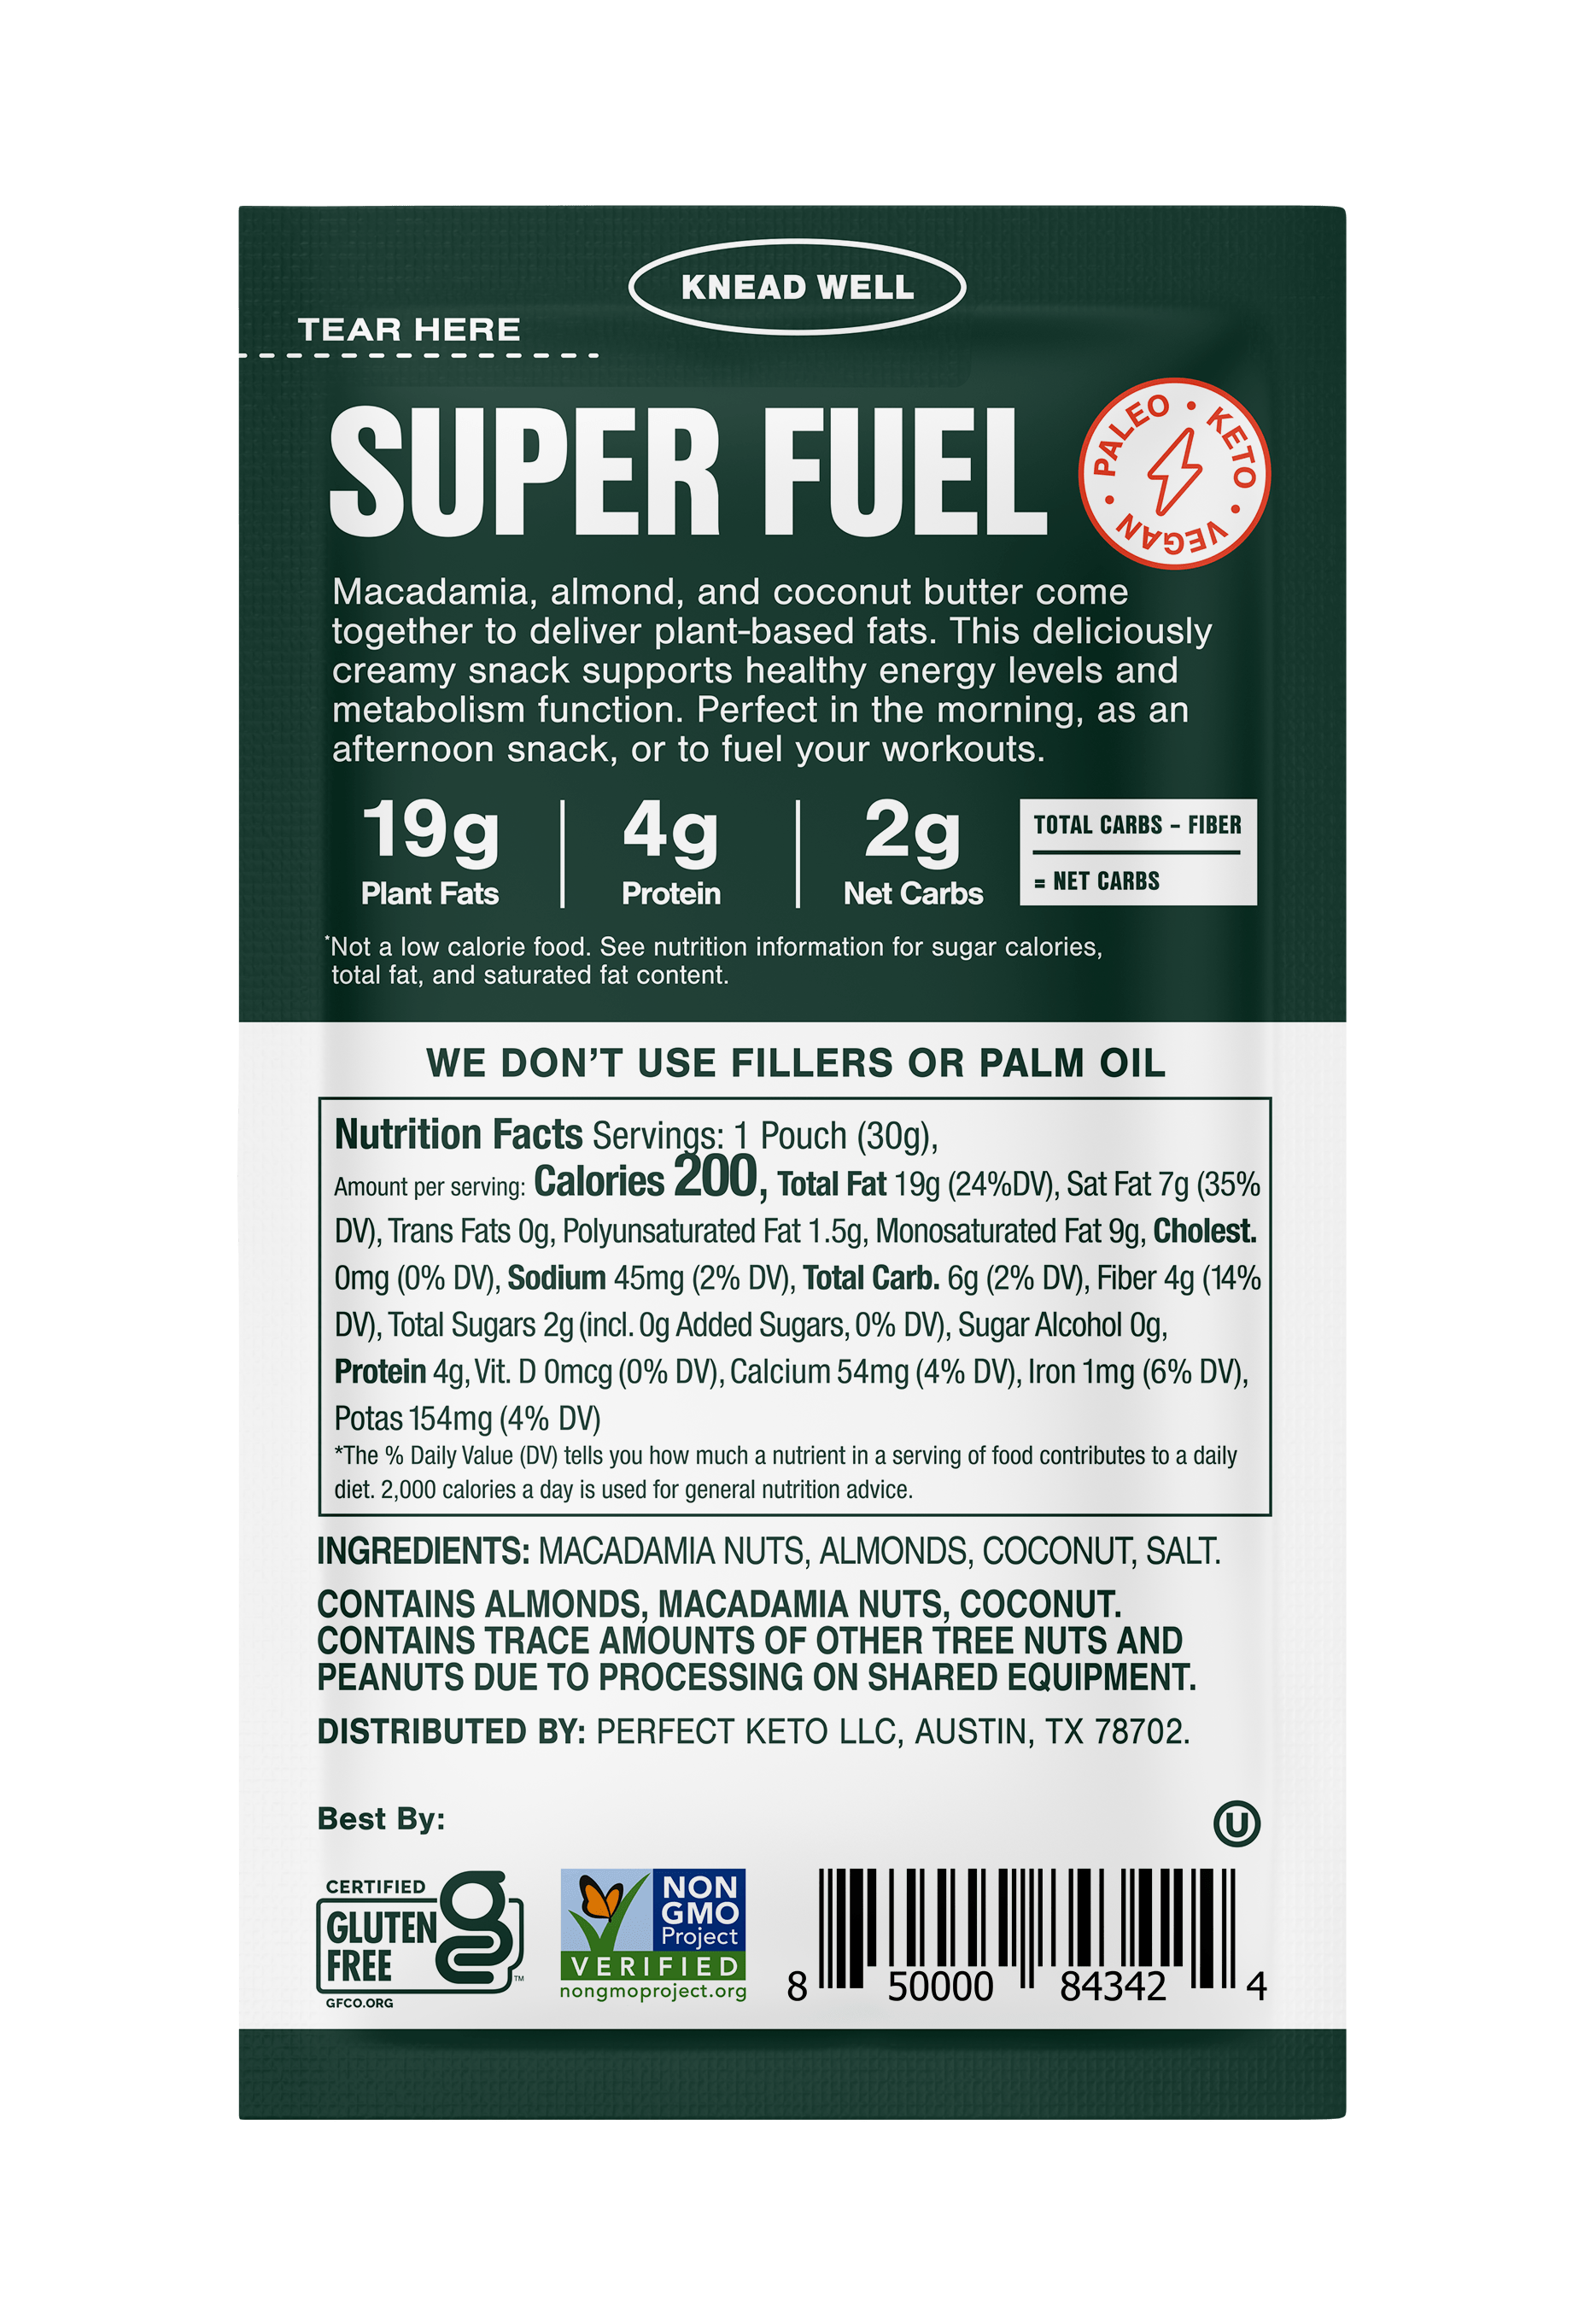 SuperFat Keto Nut Butter Single Serves - 10 packs